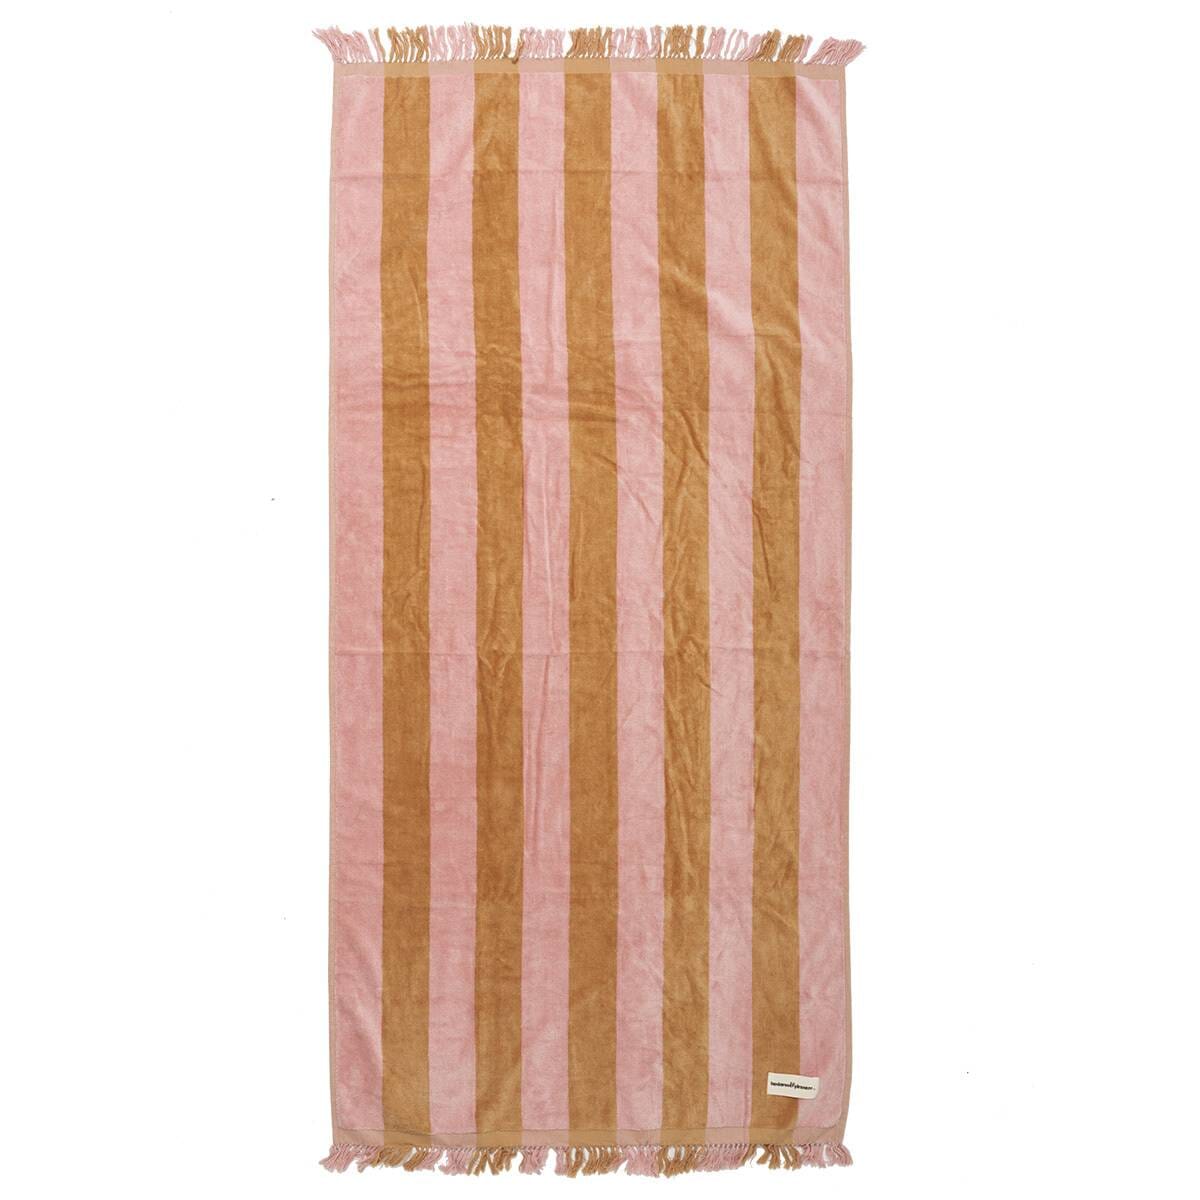 Studio image of sand pink beach towel